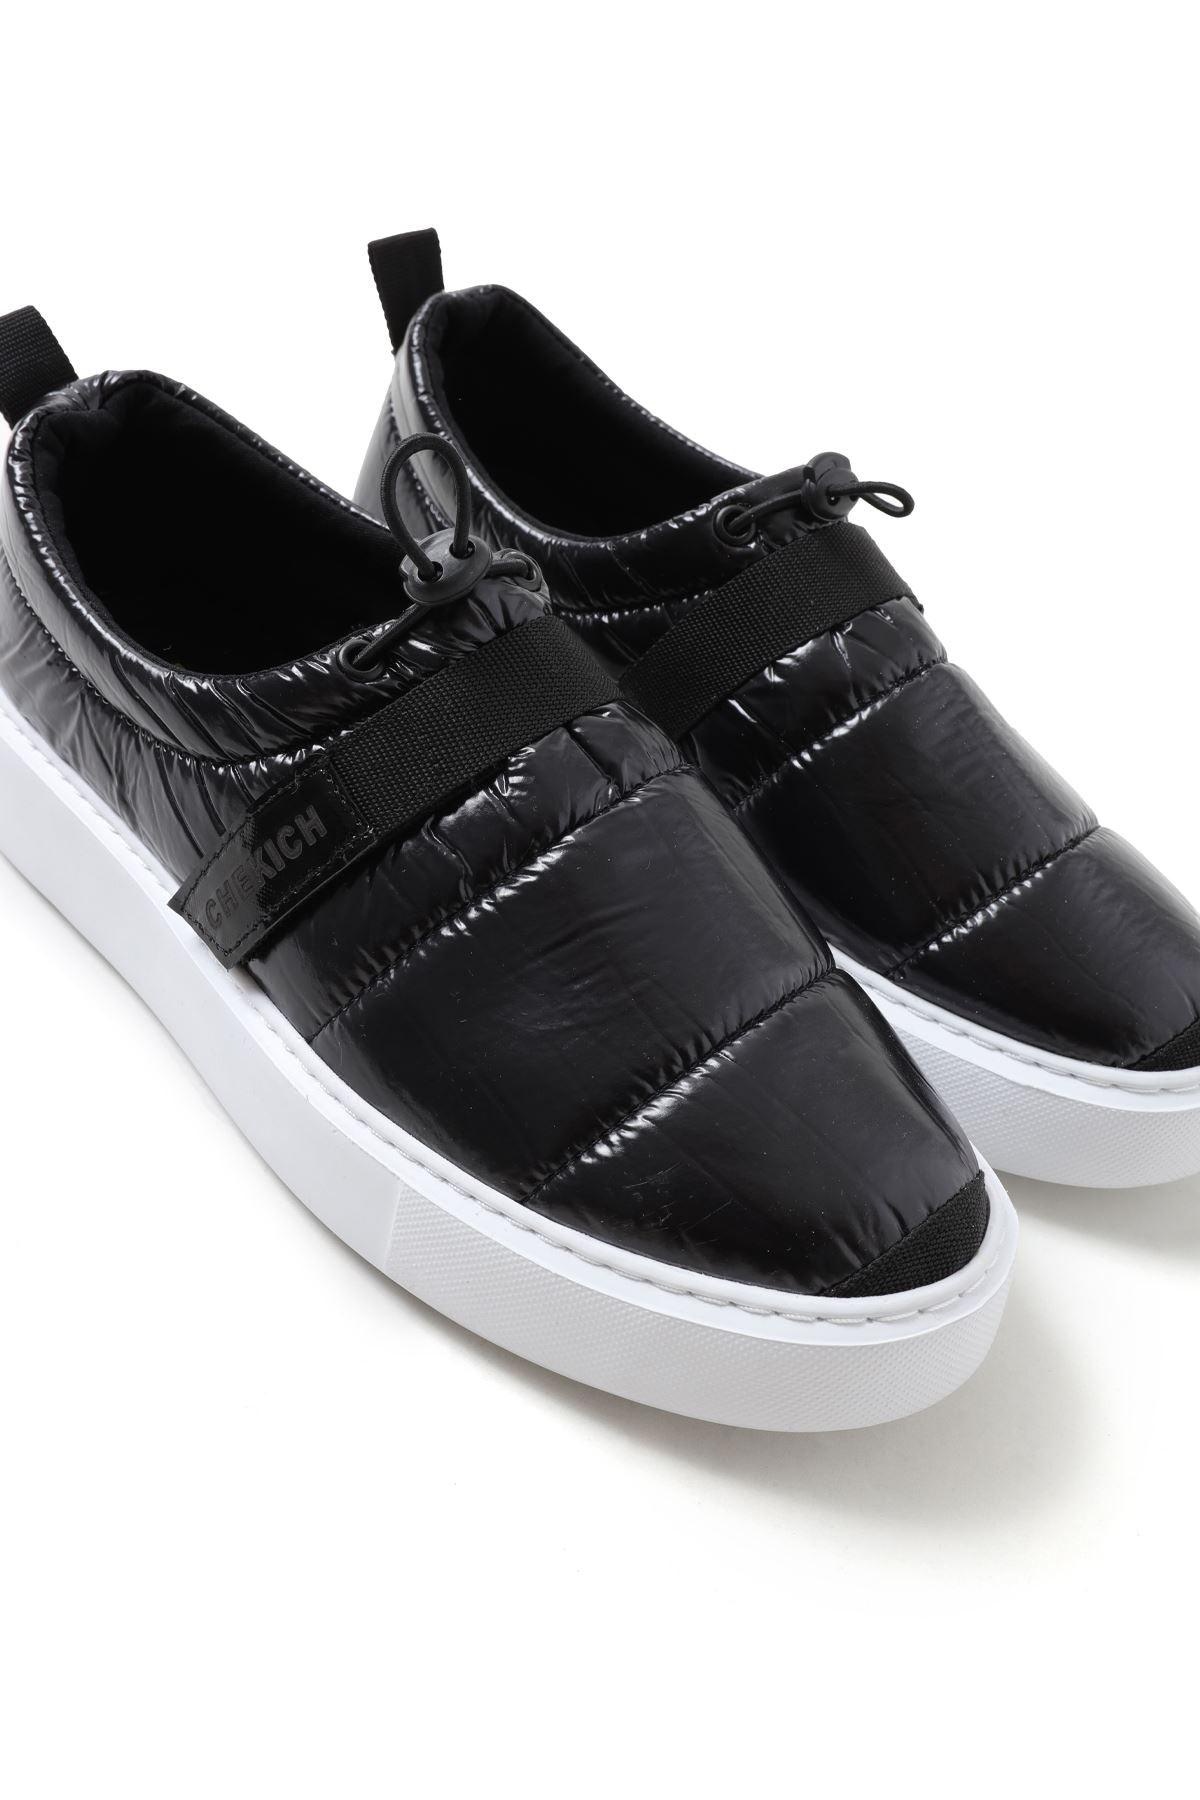 CH137 BT Men's Shoes BLACK - STREET MODE ™